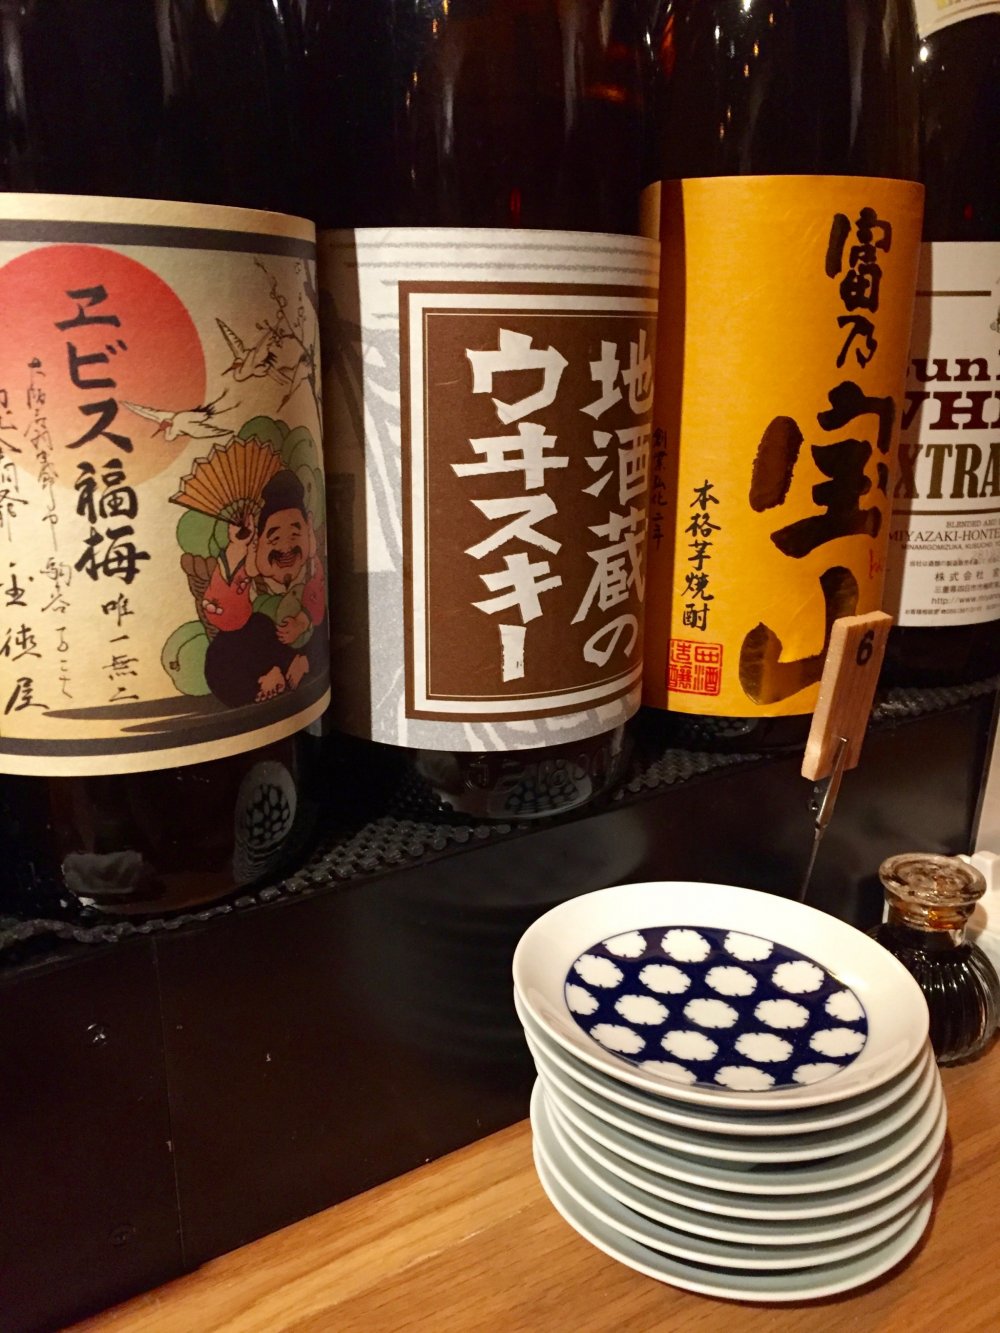 Big bottles with sake, whiskey, and plum liquor